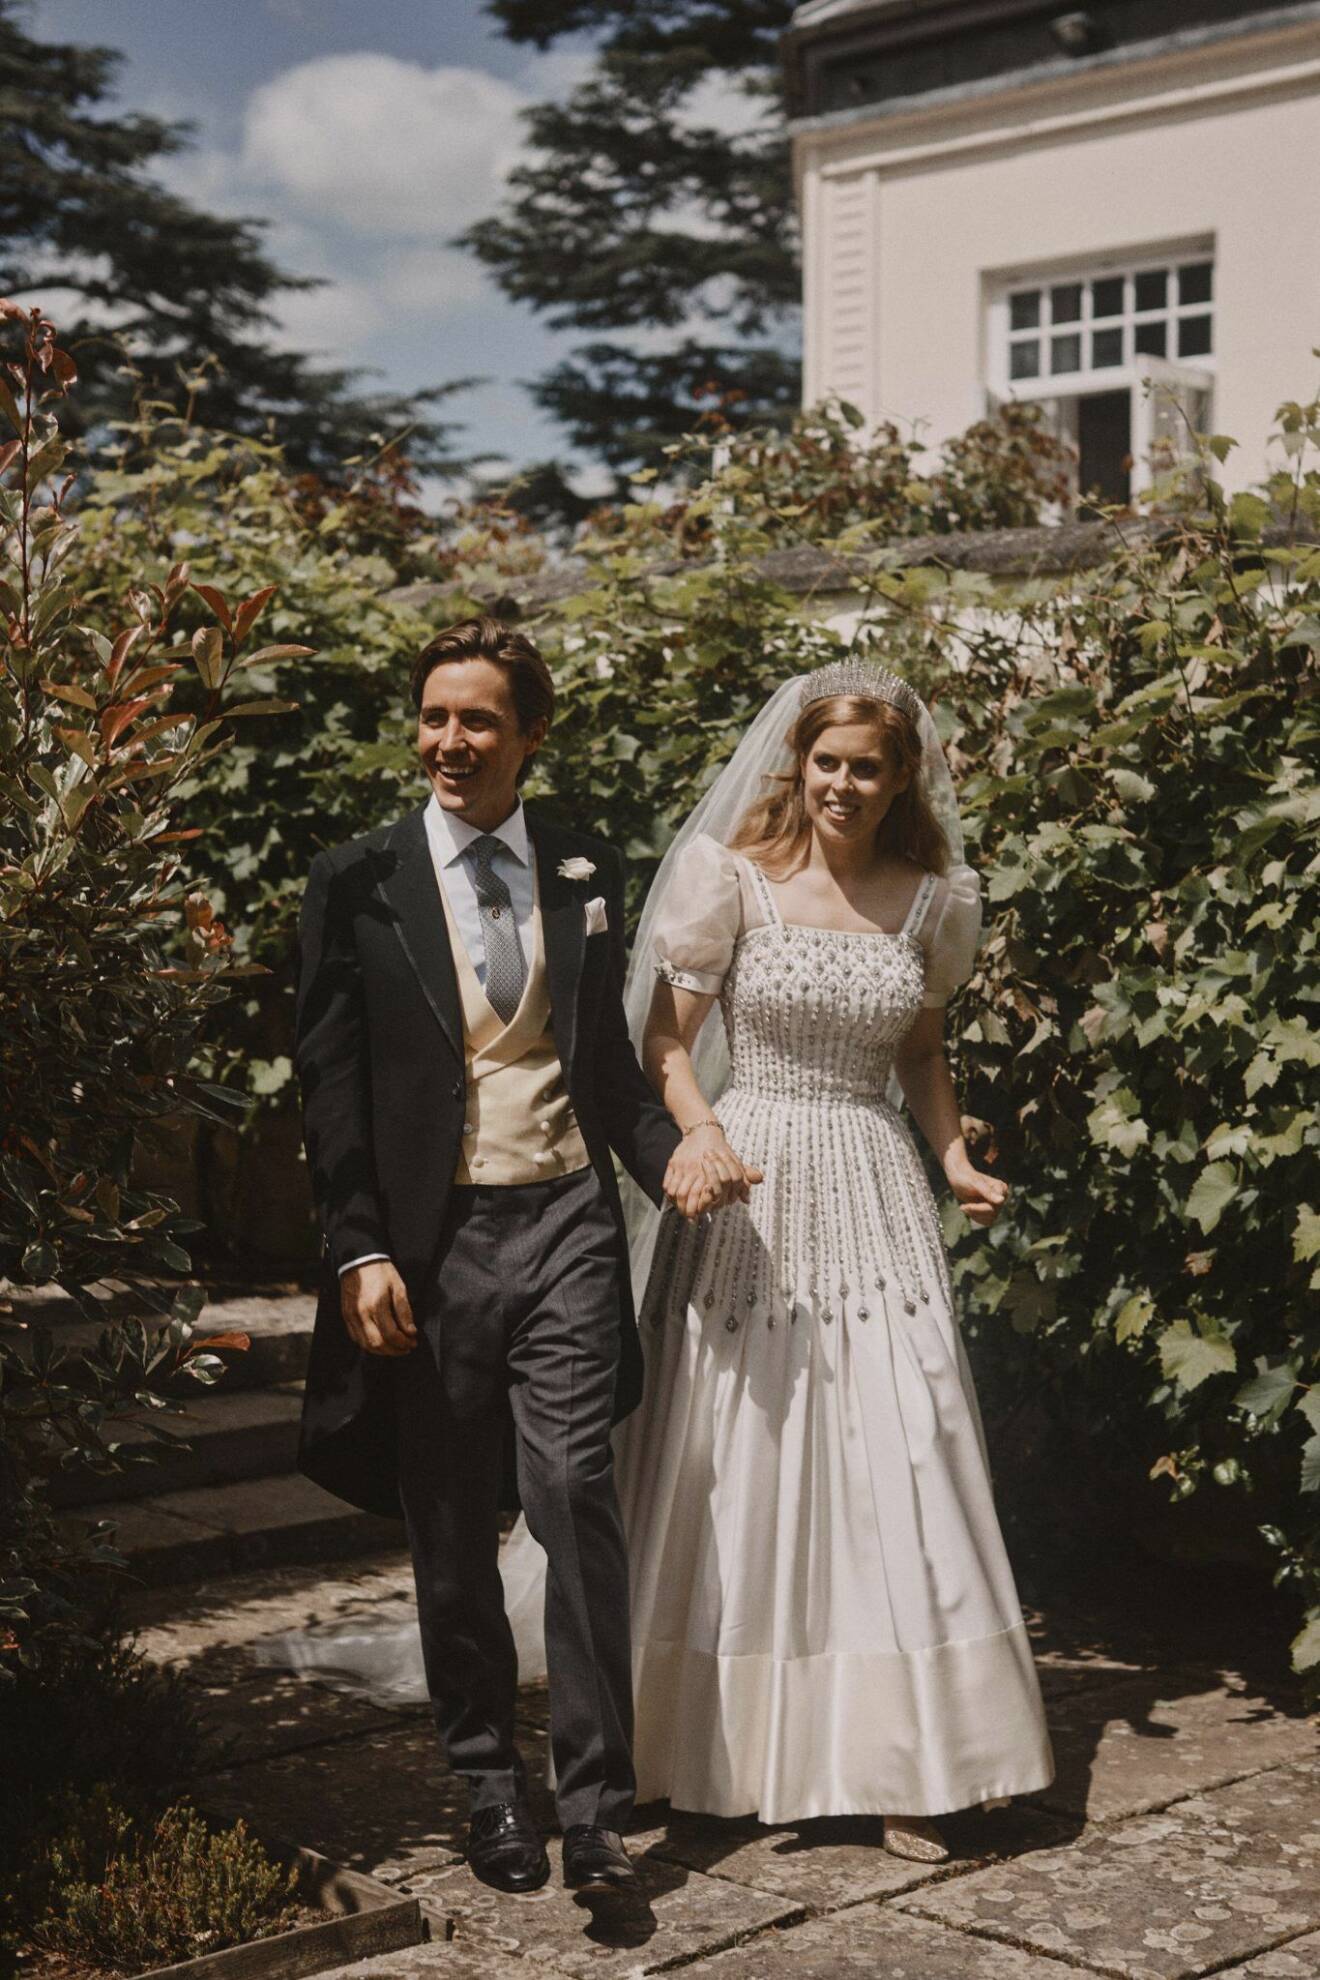 Prinsessan Beatrixe och Edoardo Mapelli Mozzi gifter sig i Windsor